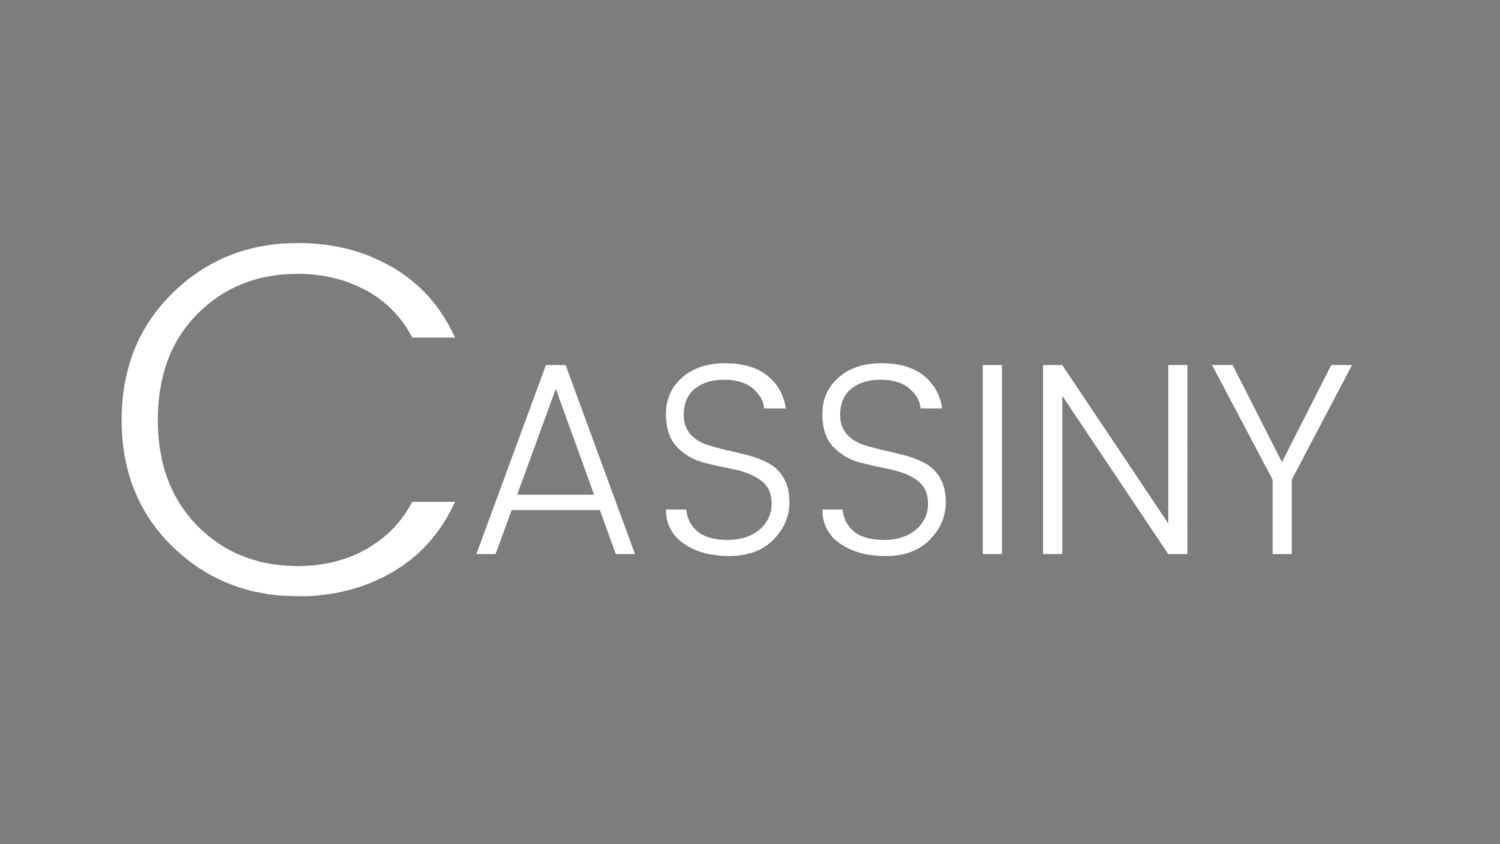 Cassiny